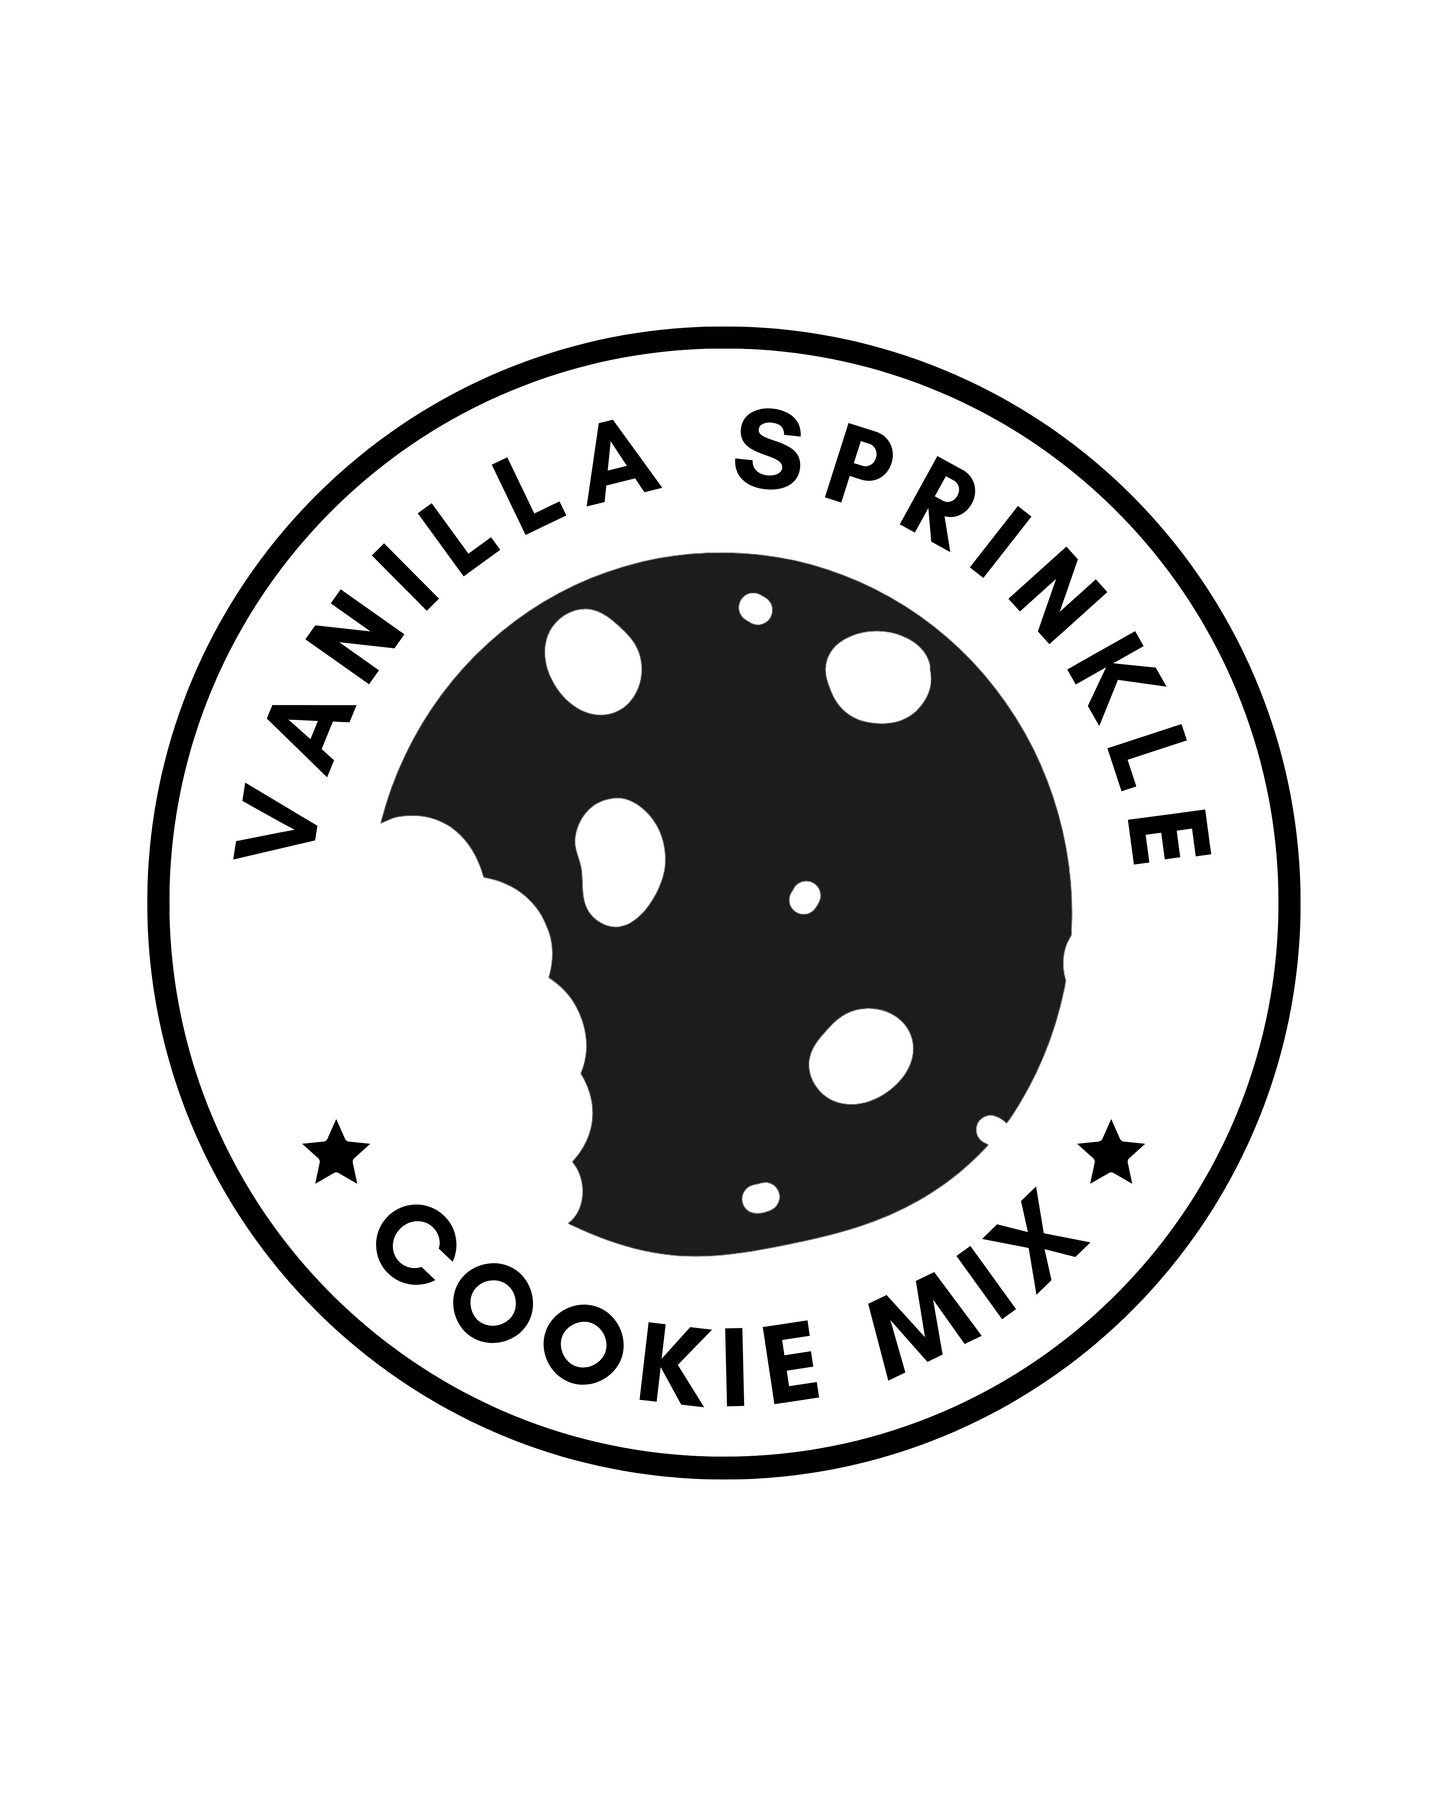 Vanilla Bean Sprinkle Cookie Mix (Pop-Up)